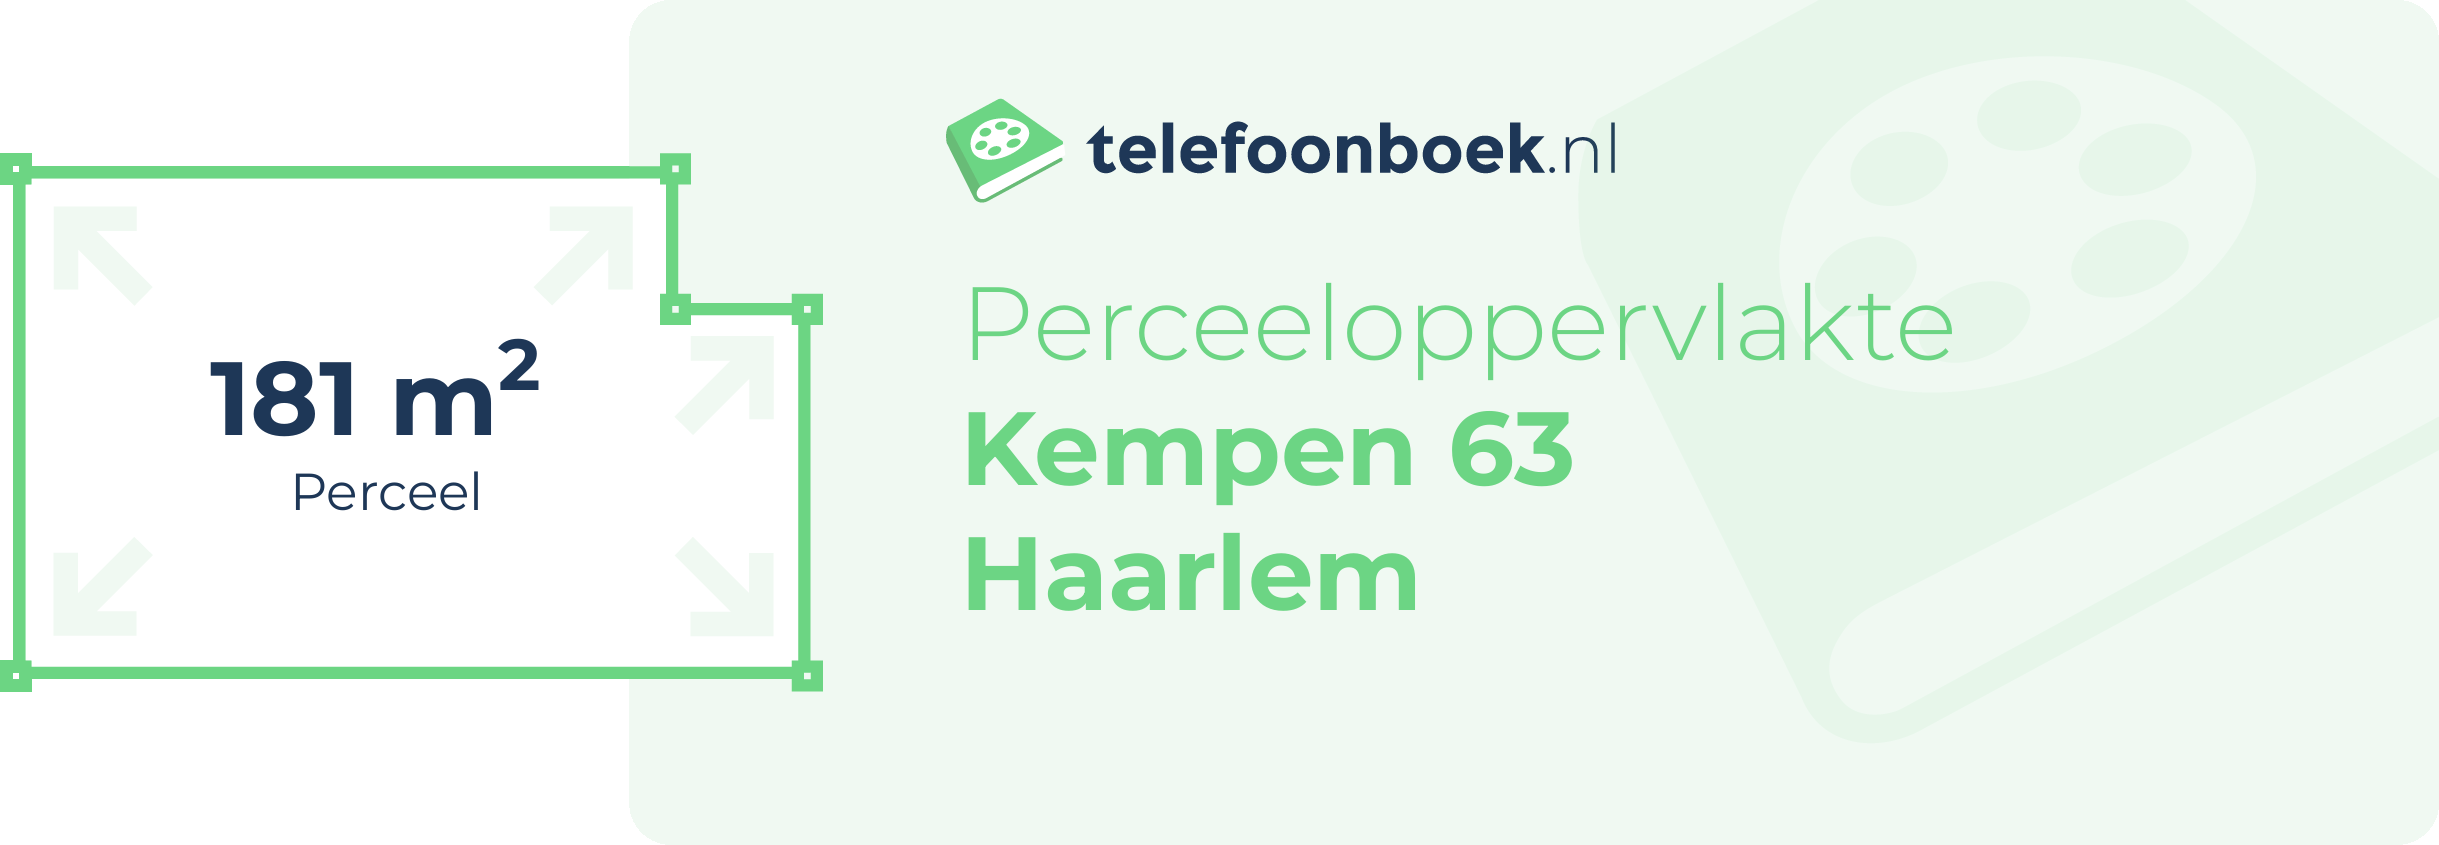 Perceeloppervlakte Kempen 63 Haarlem